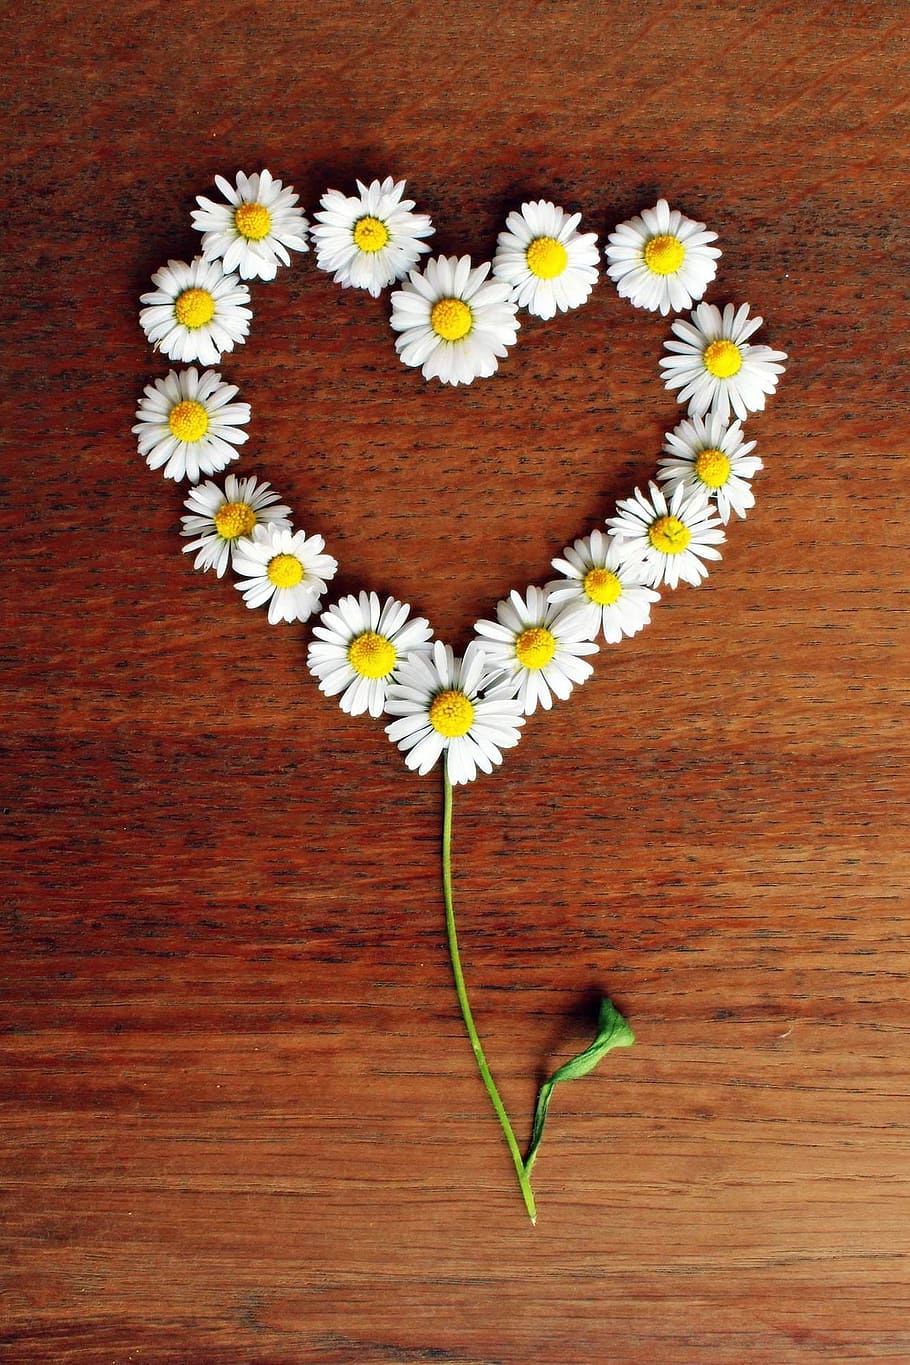 white, daisy flowers, heart-shape decor, brown, wooden, surface, white Daisy, flowers, heart-shape, decor